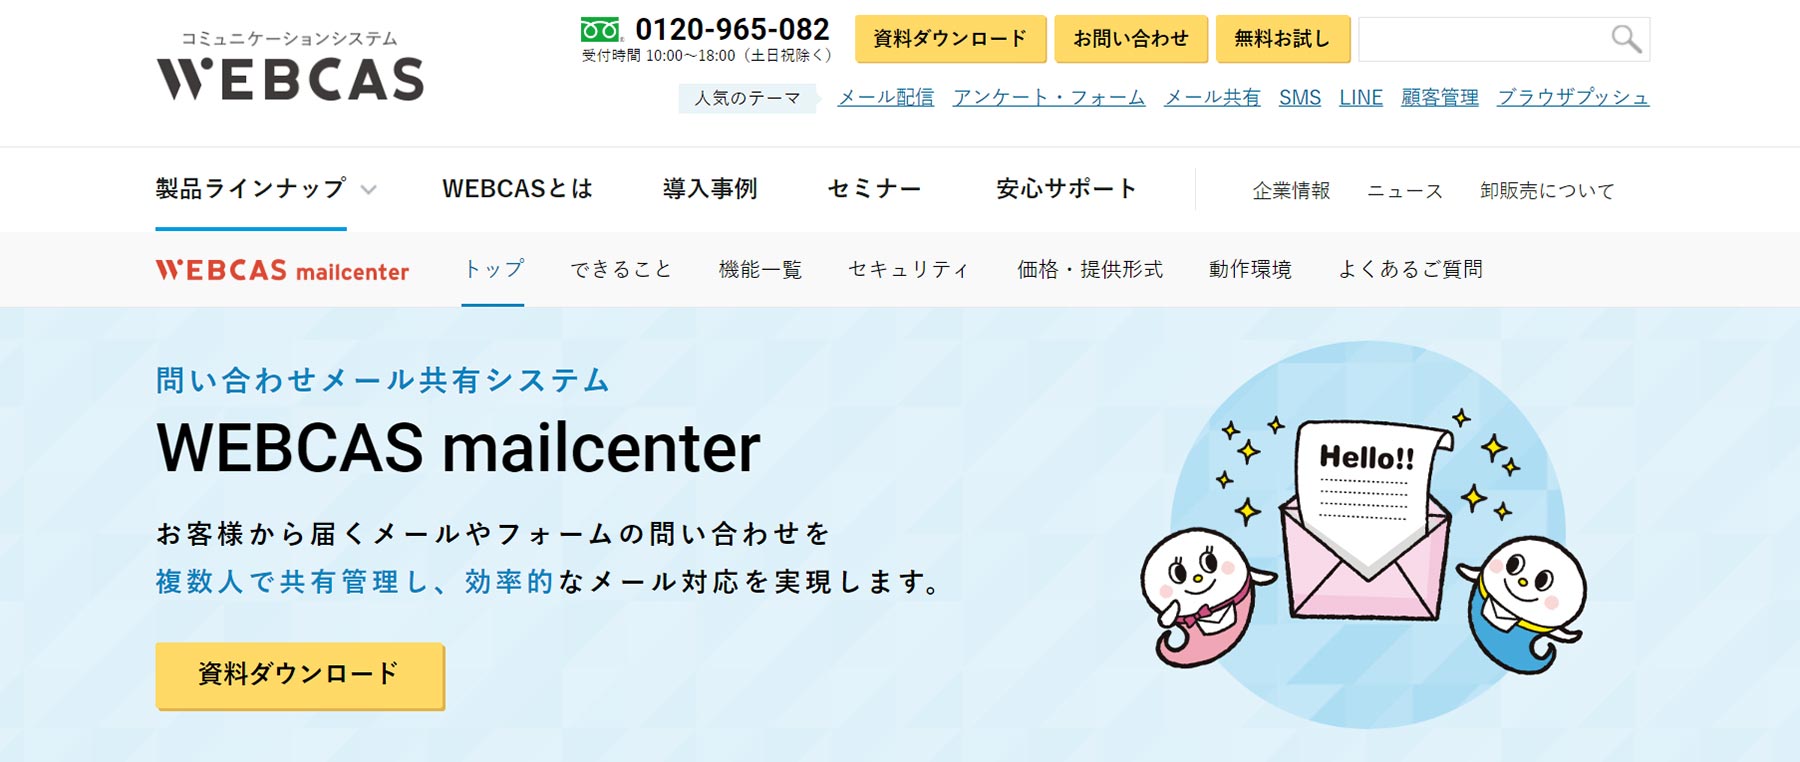 WEBCAS mailcenter_公式Webサイト